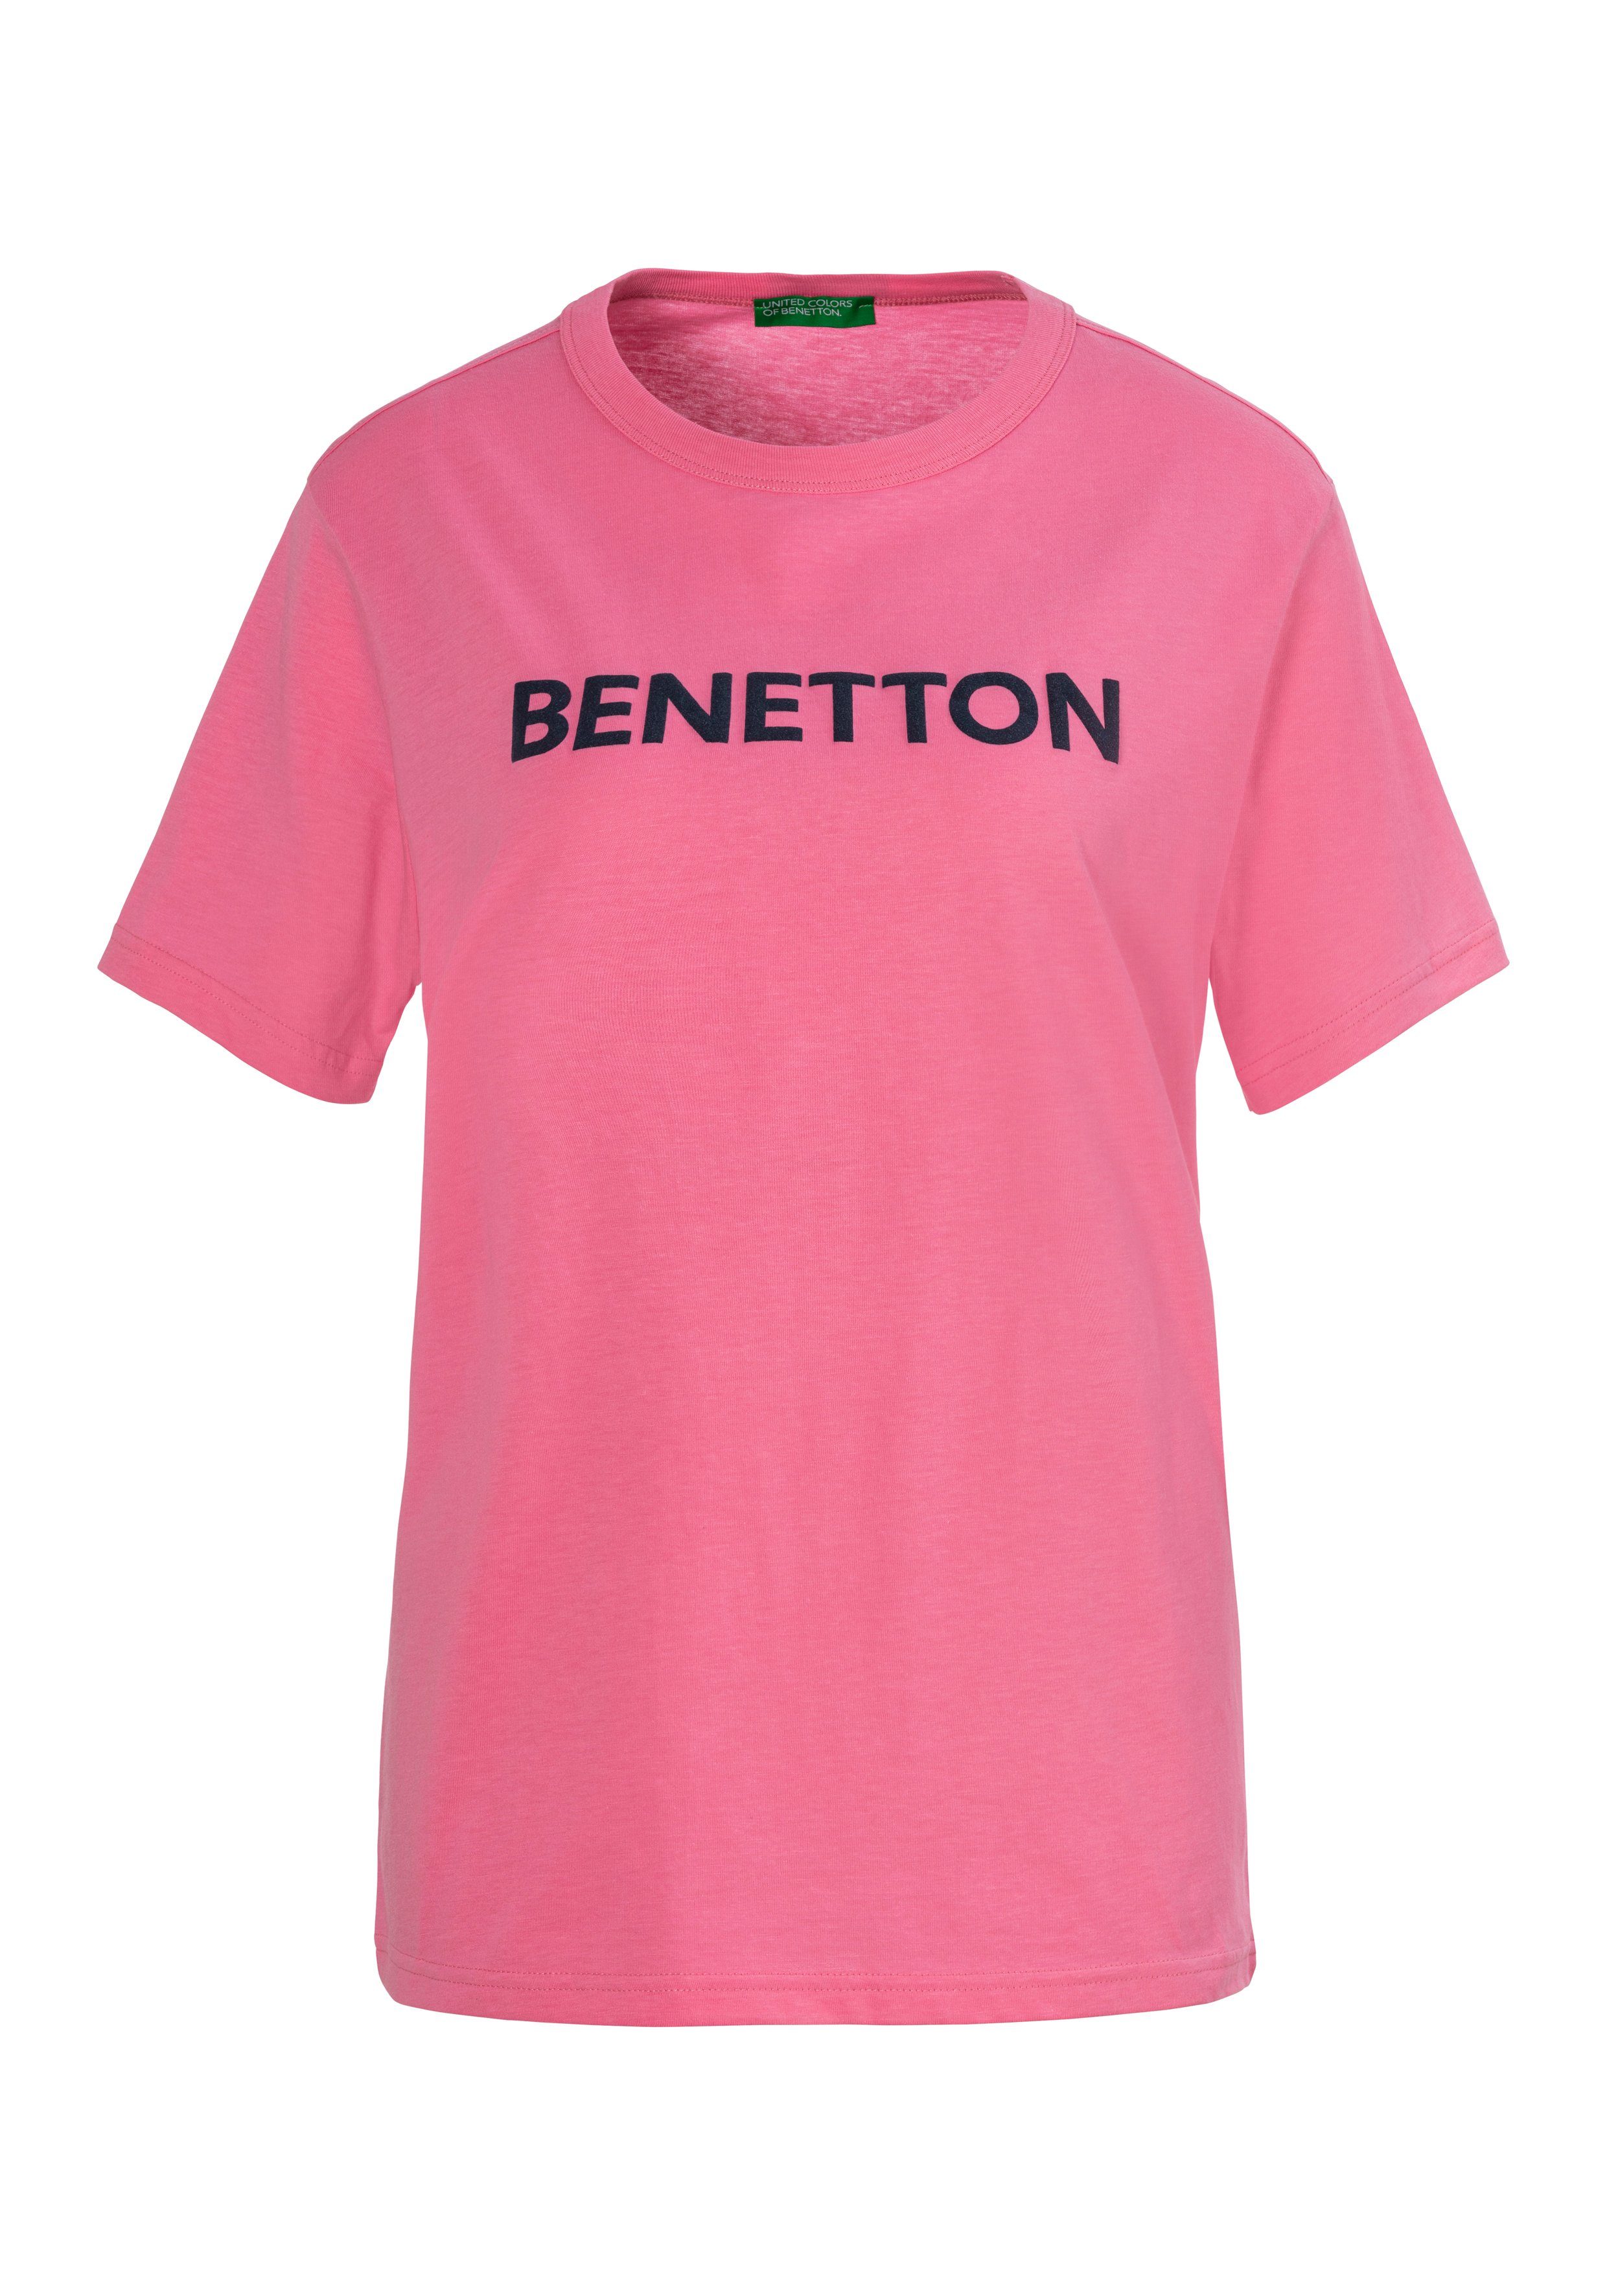 Aufdruck Benetton Benetton Colors United T-Shirt mit of